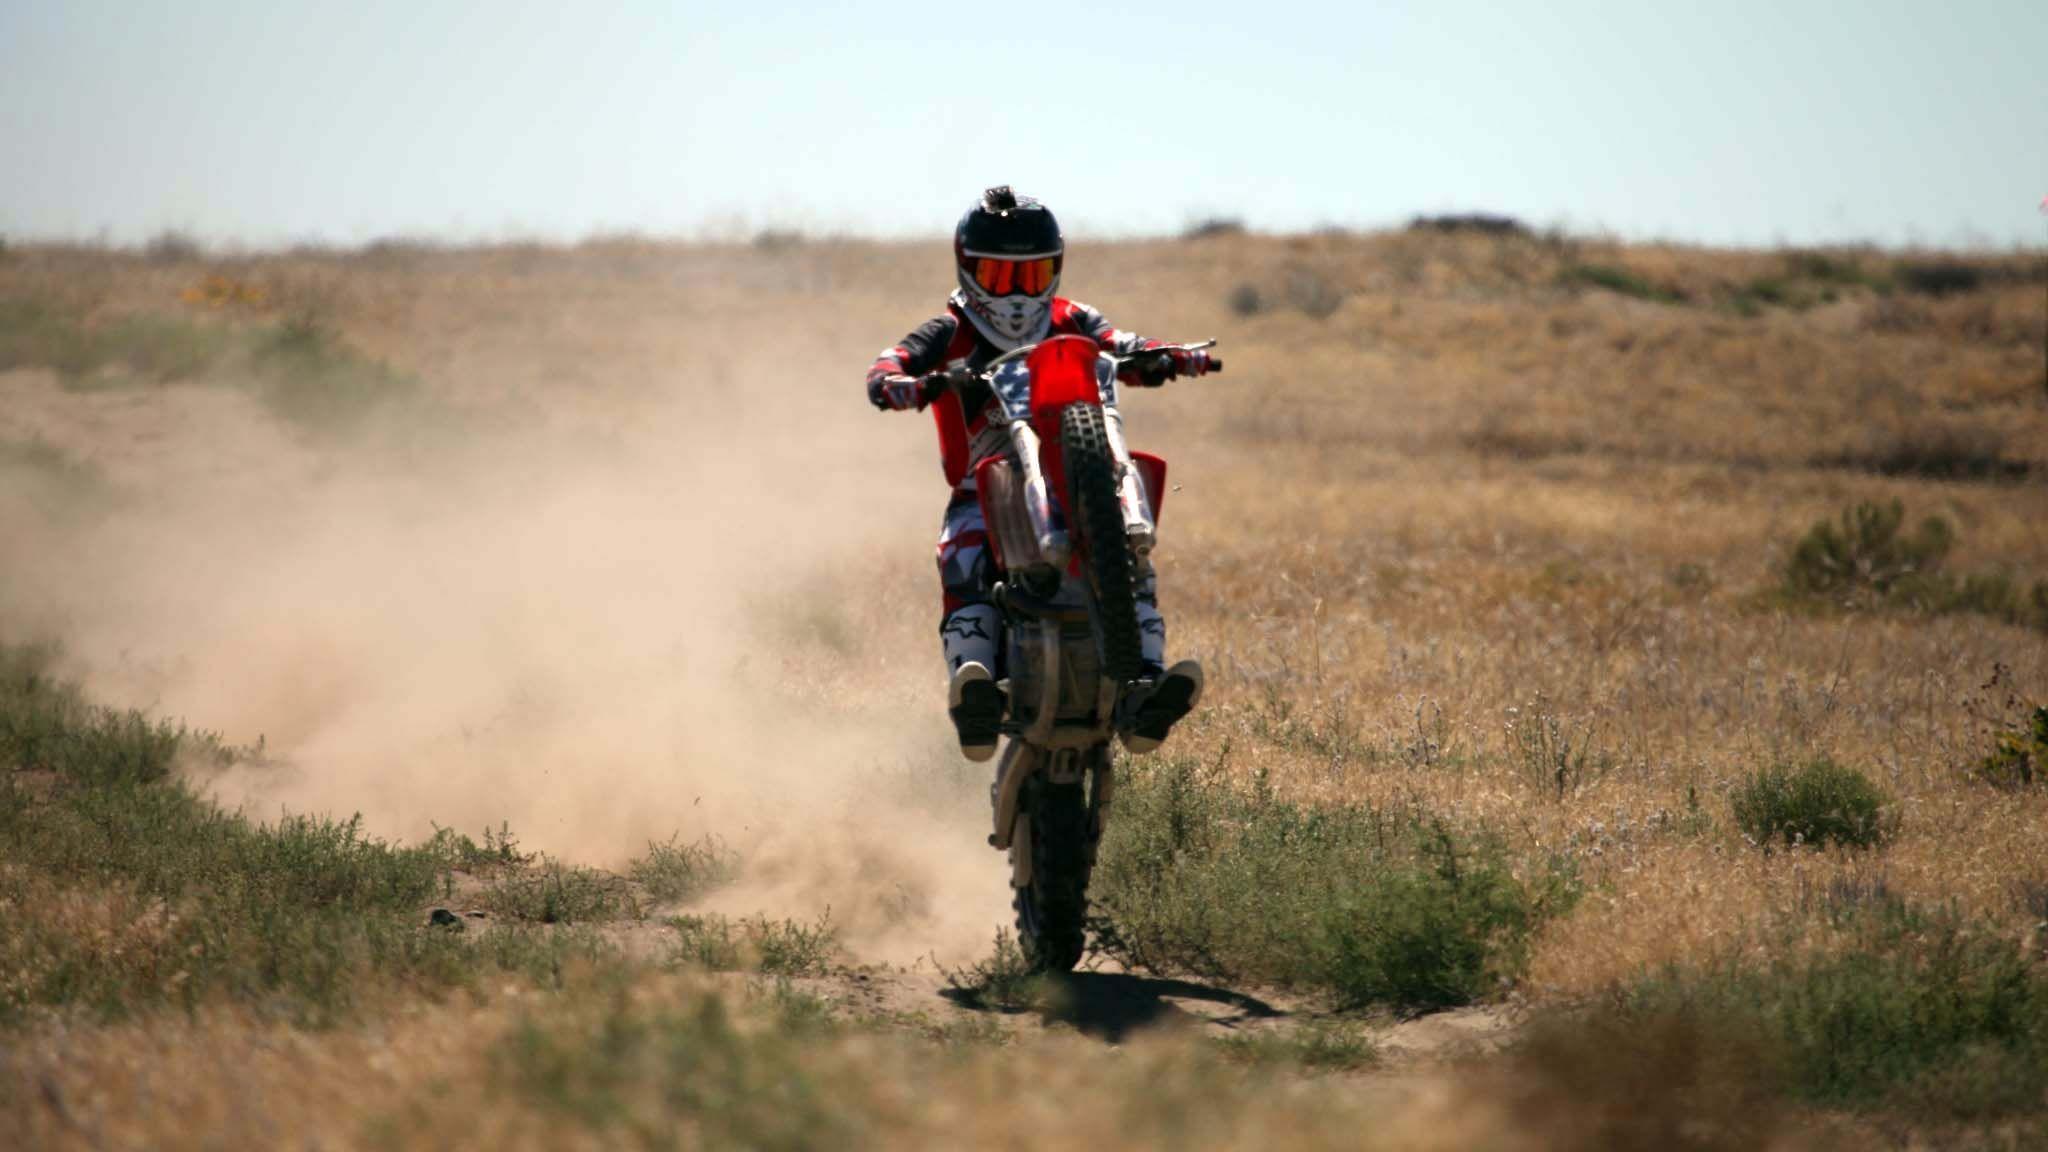 Wheeling Motocross Bike Stunt HD Desktop Wallpaper 83827  Baltana